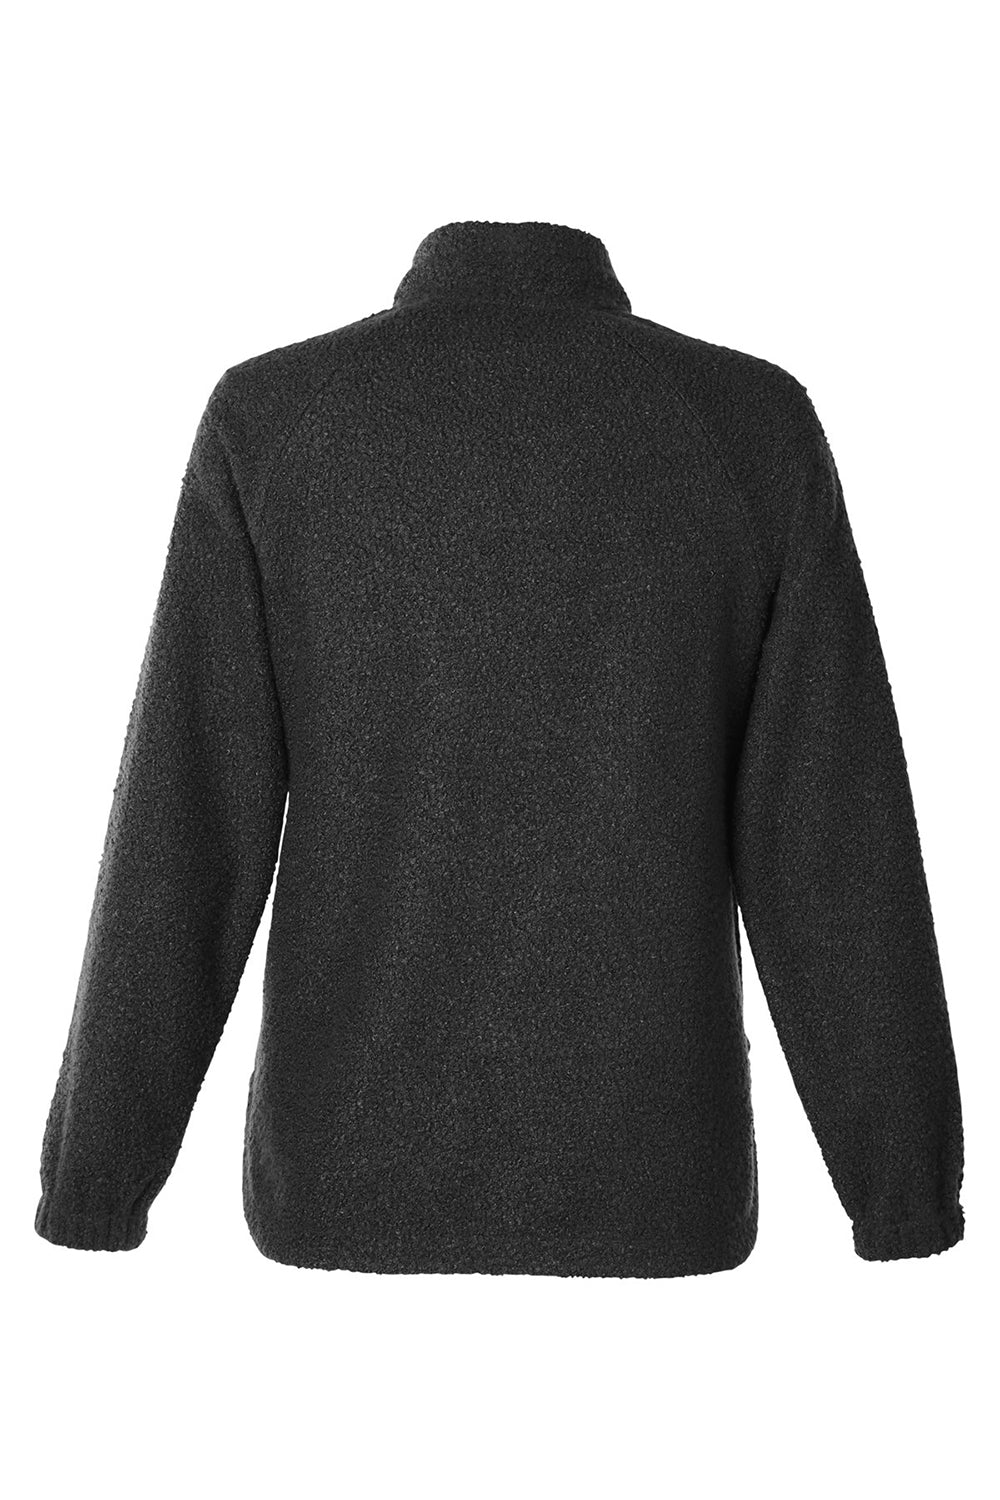 North End NE713W Womens Aura Sweater Fleece 1/4 Zip Sweatshirt Black Flat Back